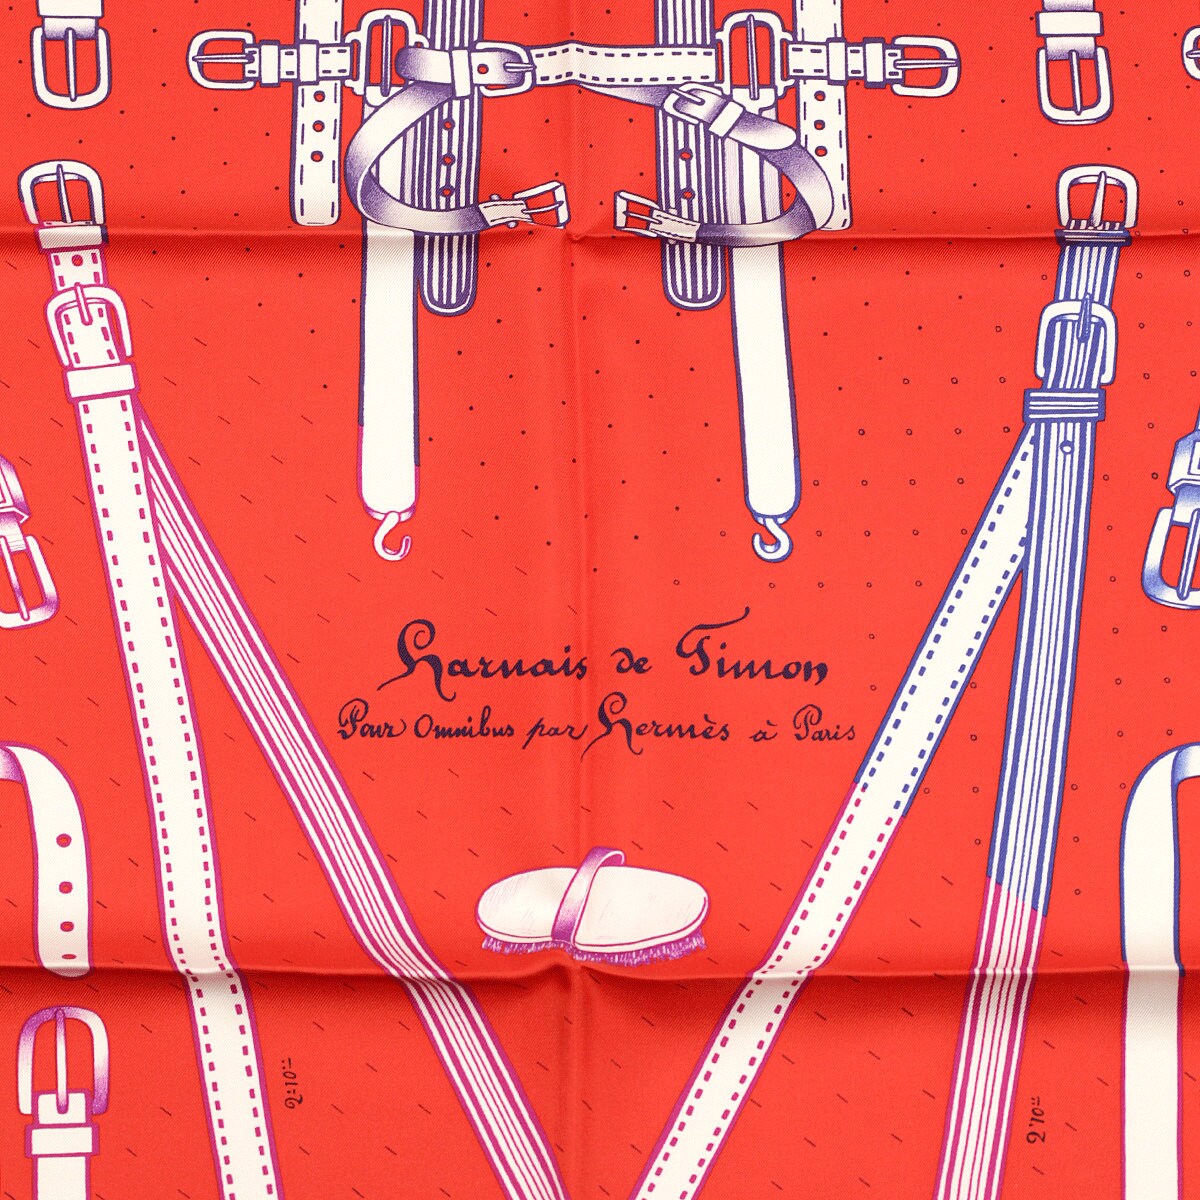 Hermes Scarf "Harnais de Timon" by Florence Manlik 90cm Silk